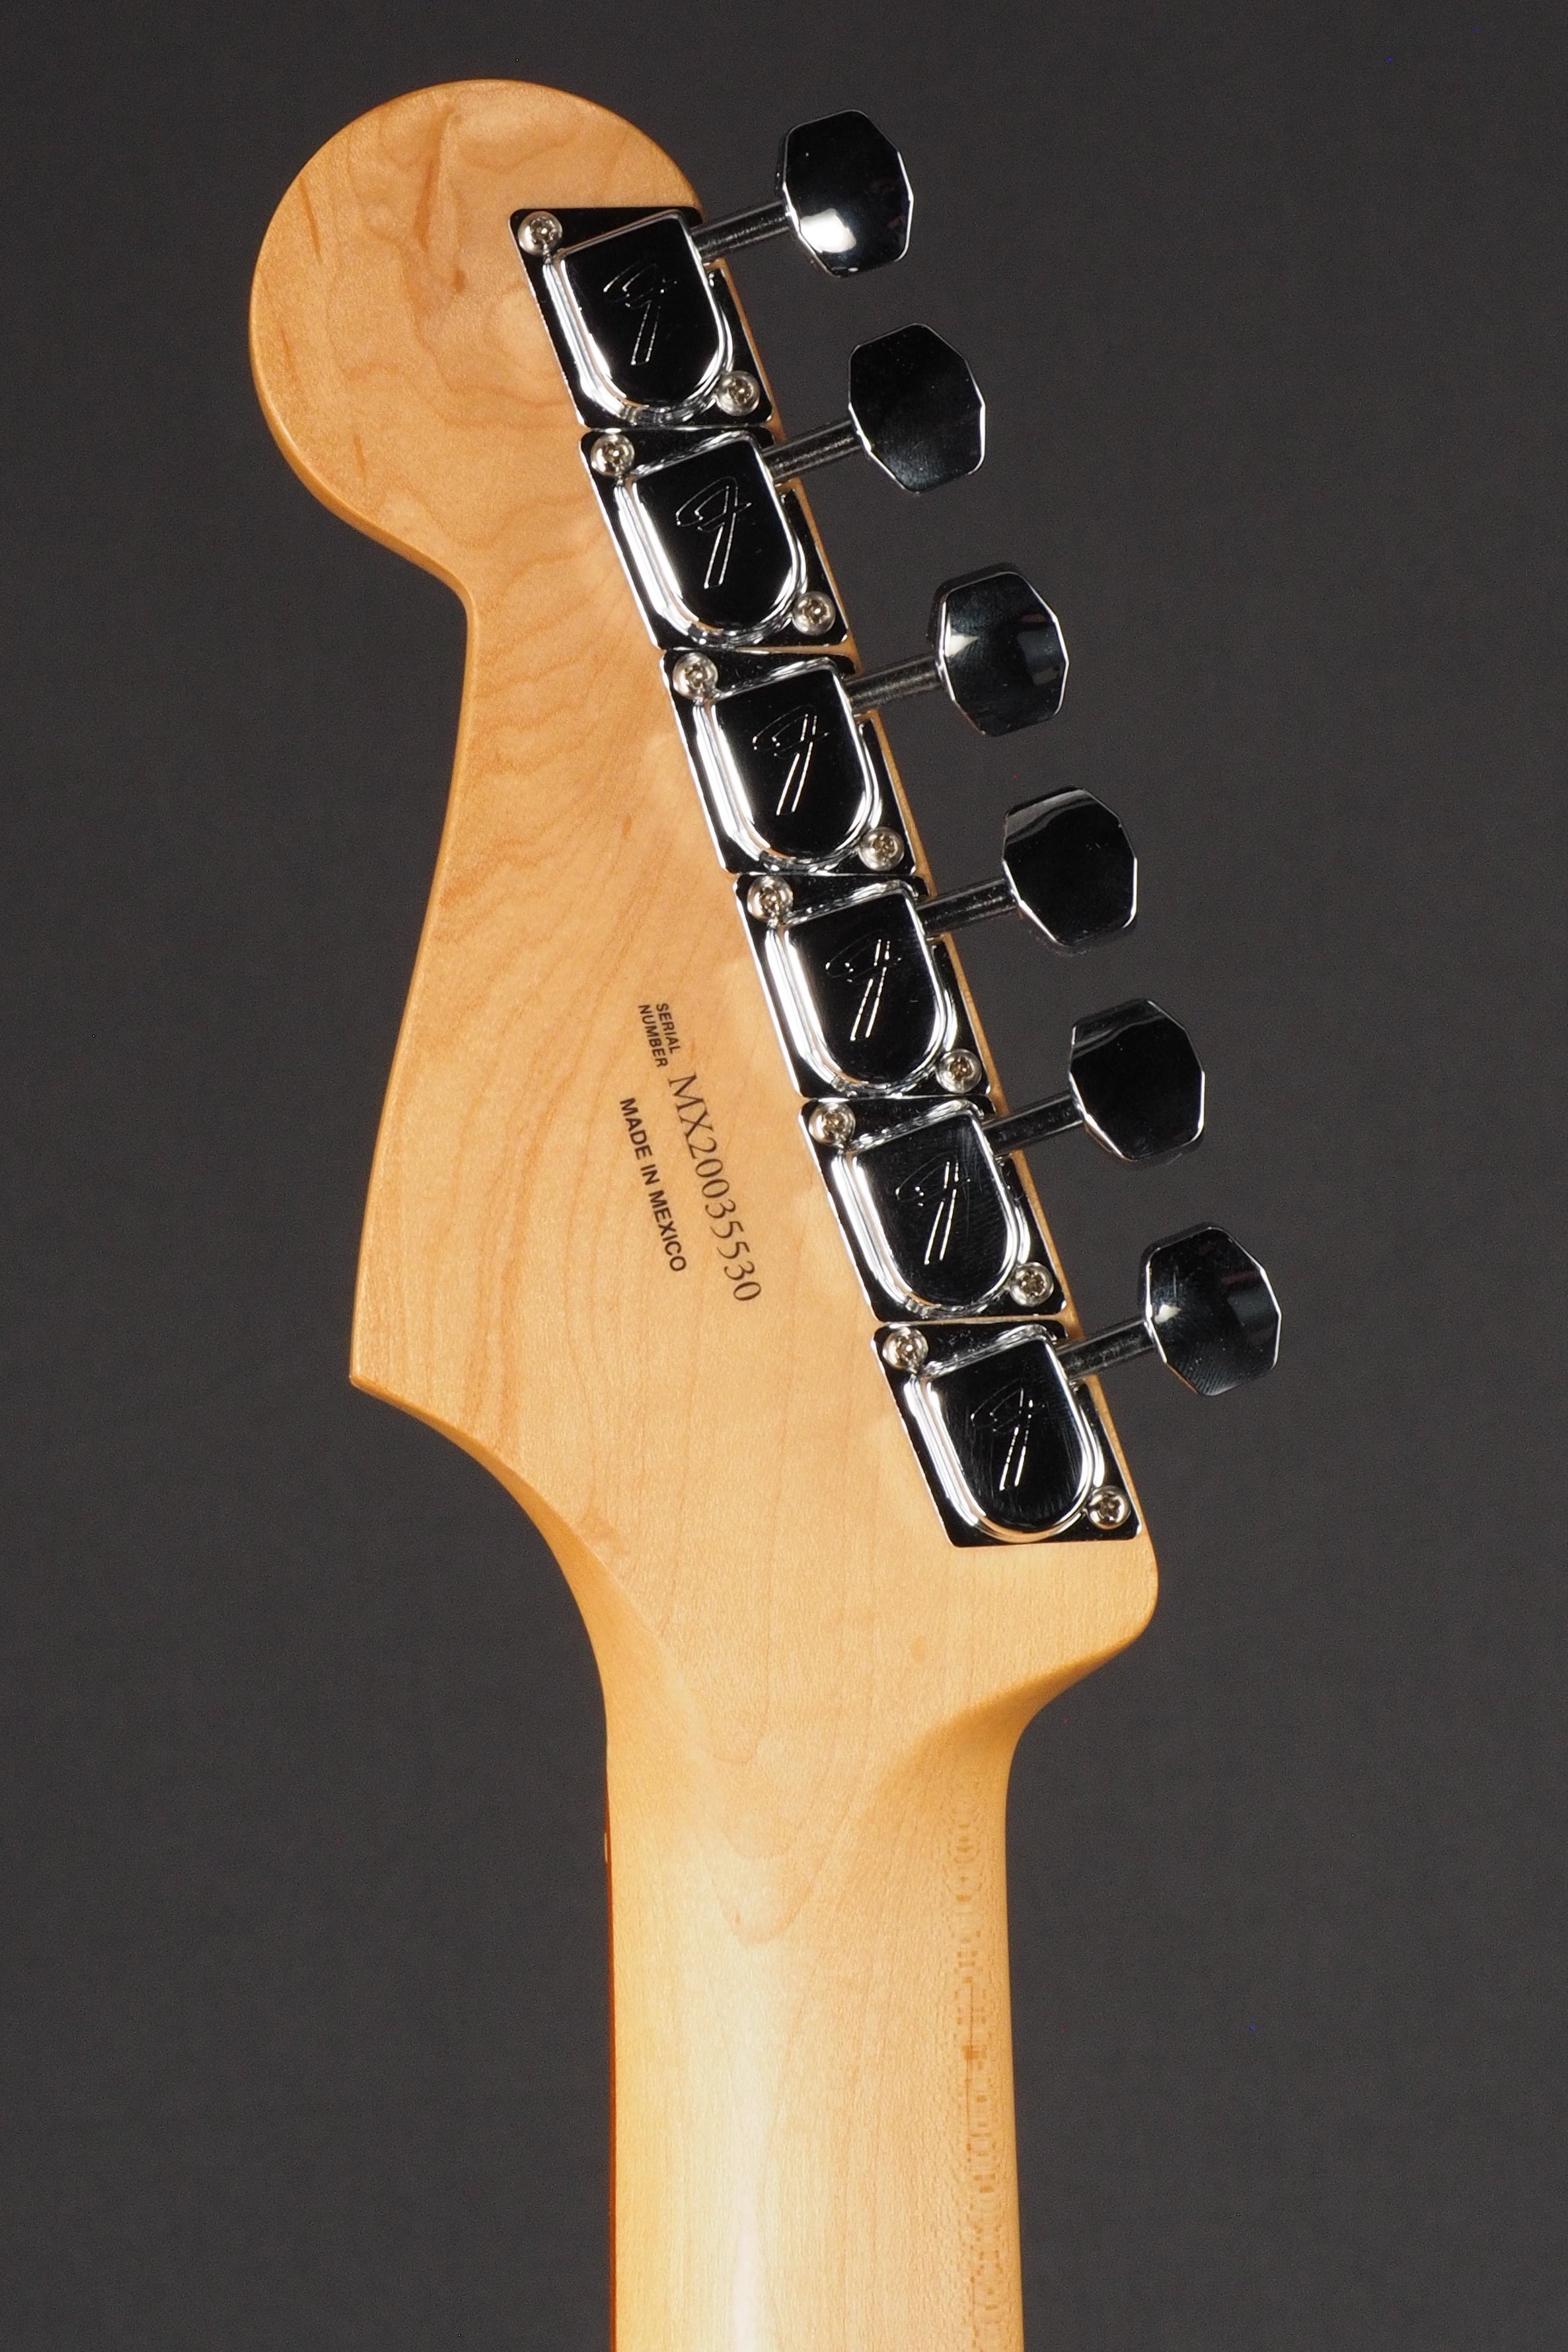 Fender Player Lead III - Metallic Purple